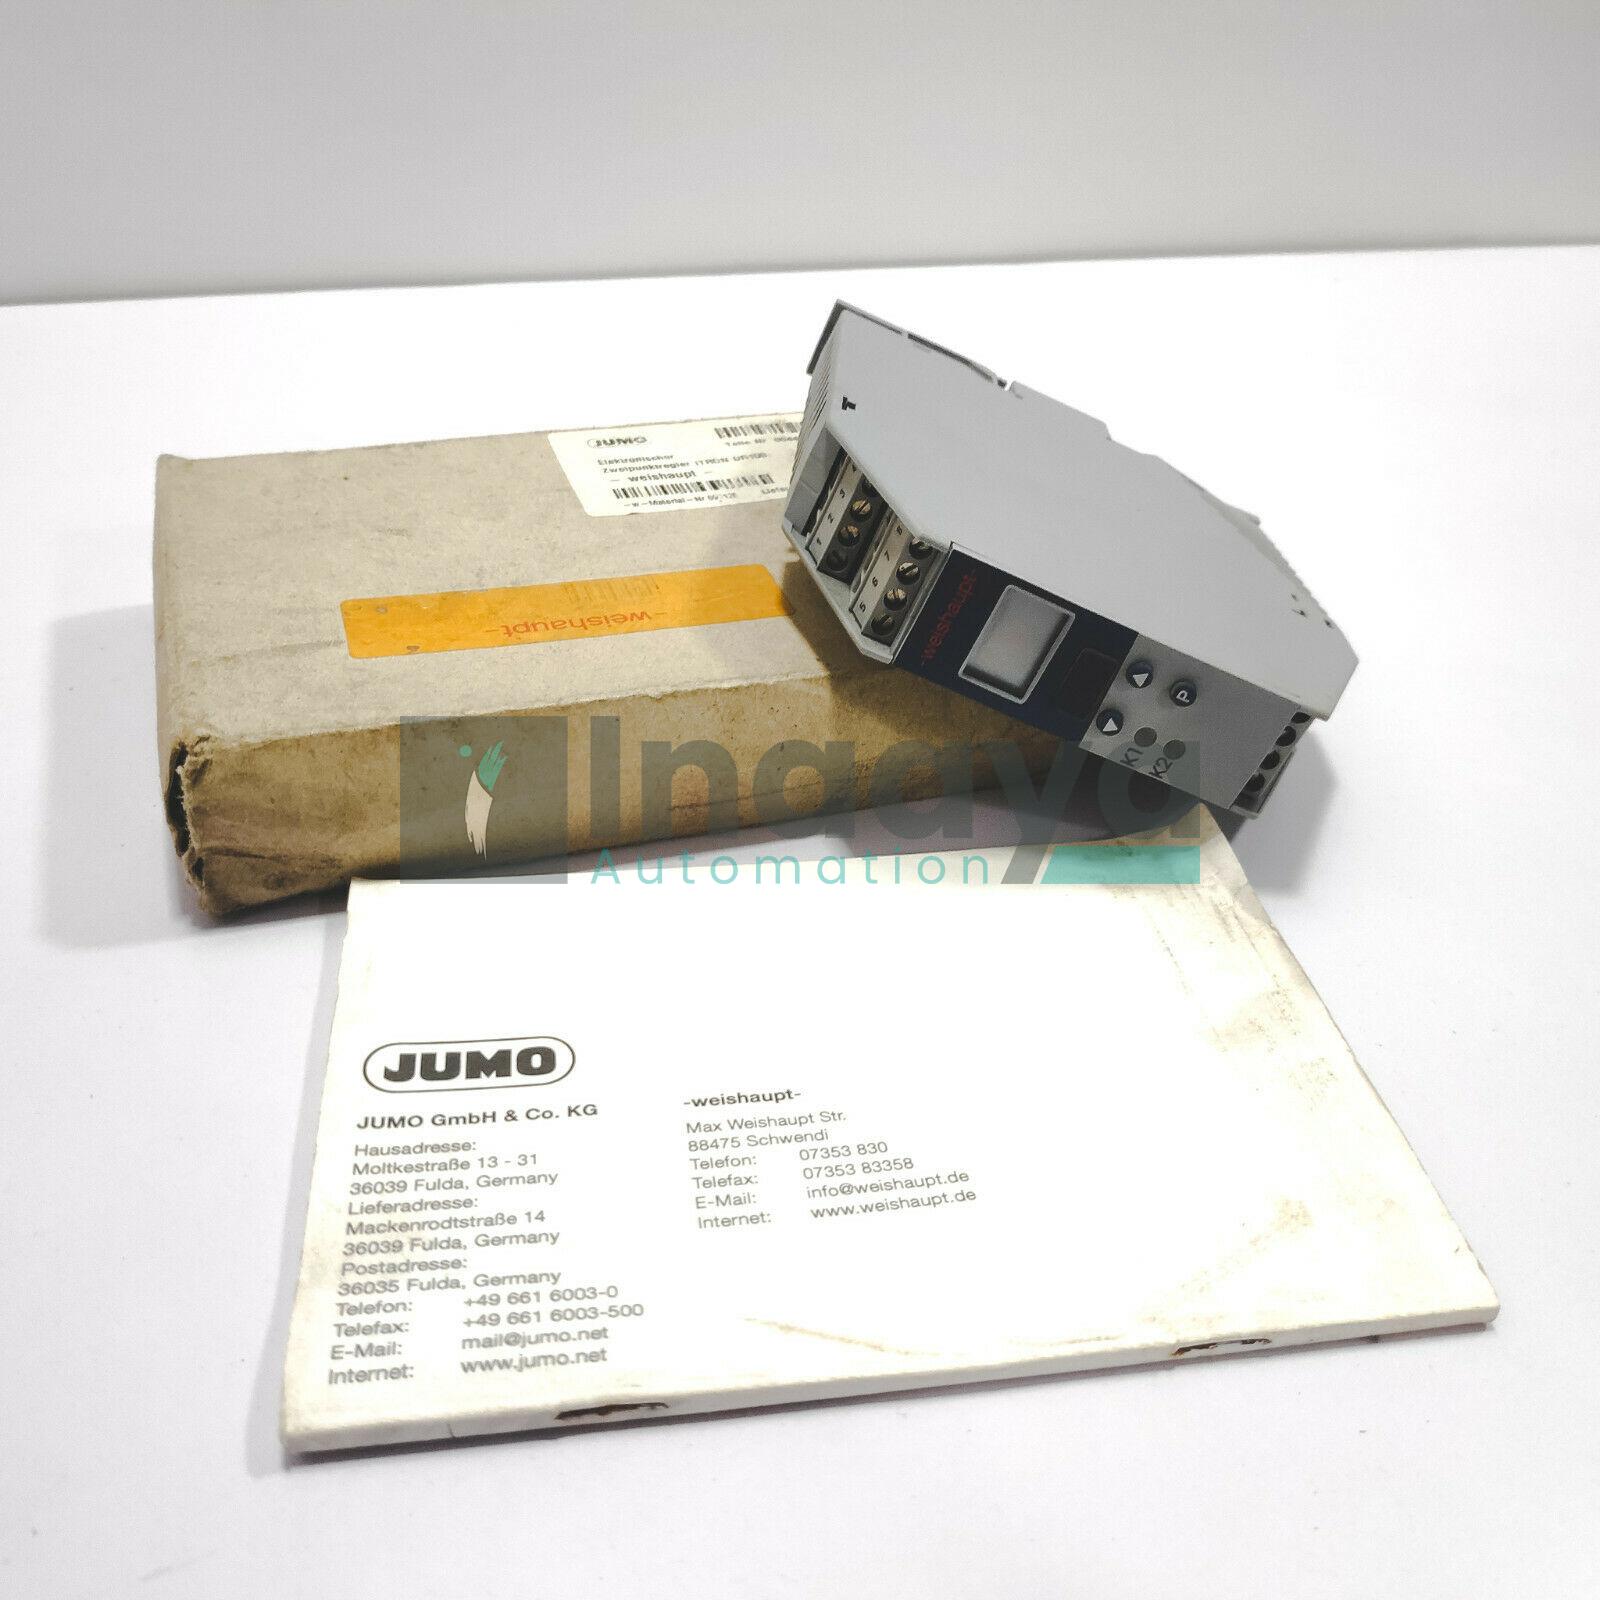 JUMO 702060/299-999-000-23 ITRON-DR-100 MICROPROCESSOR COMPACT CONTROLLER